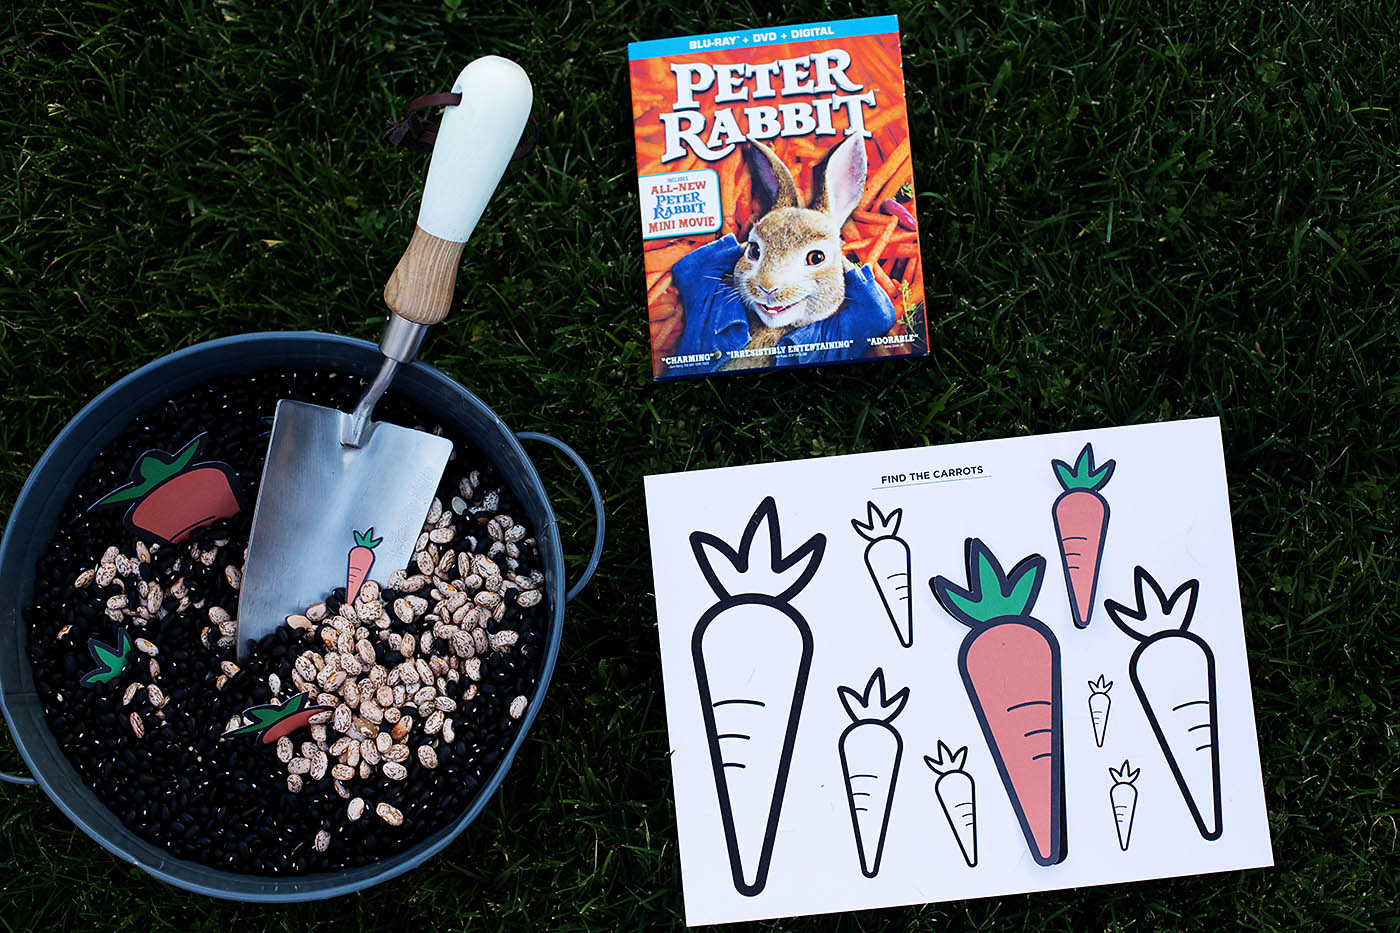 Peter Rabbit family movie night + printable carrot game